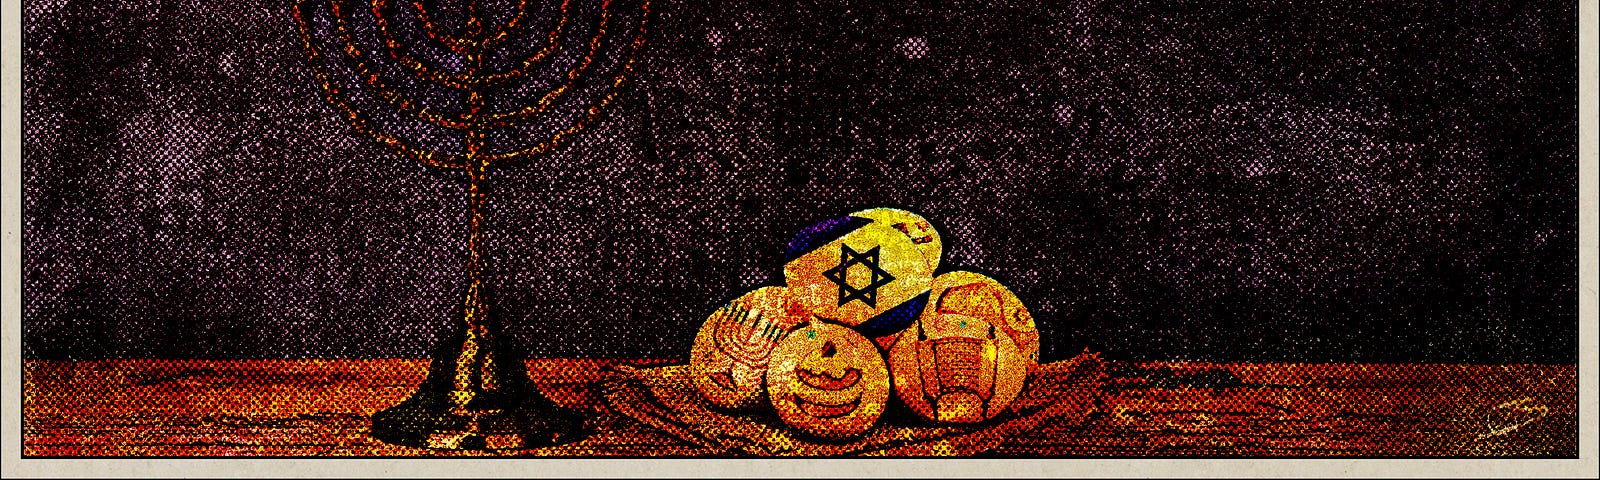 Jewish Easter eggs